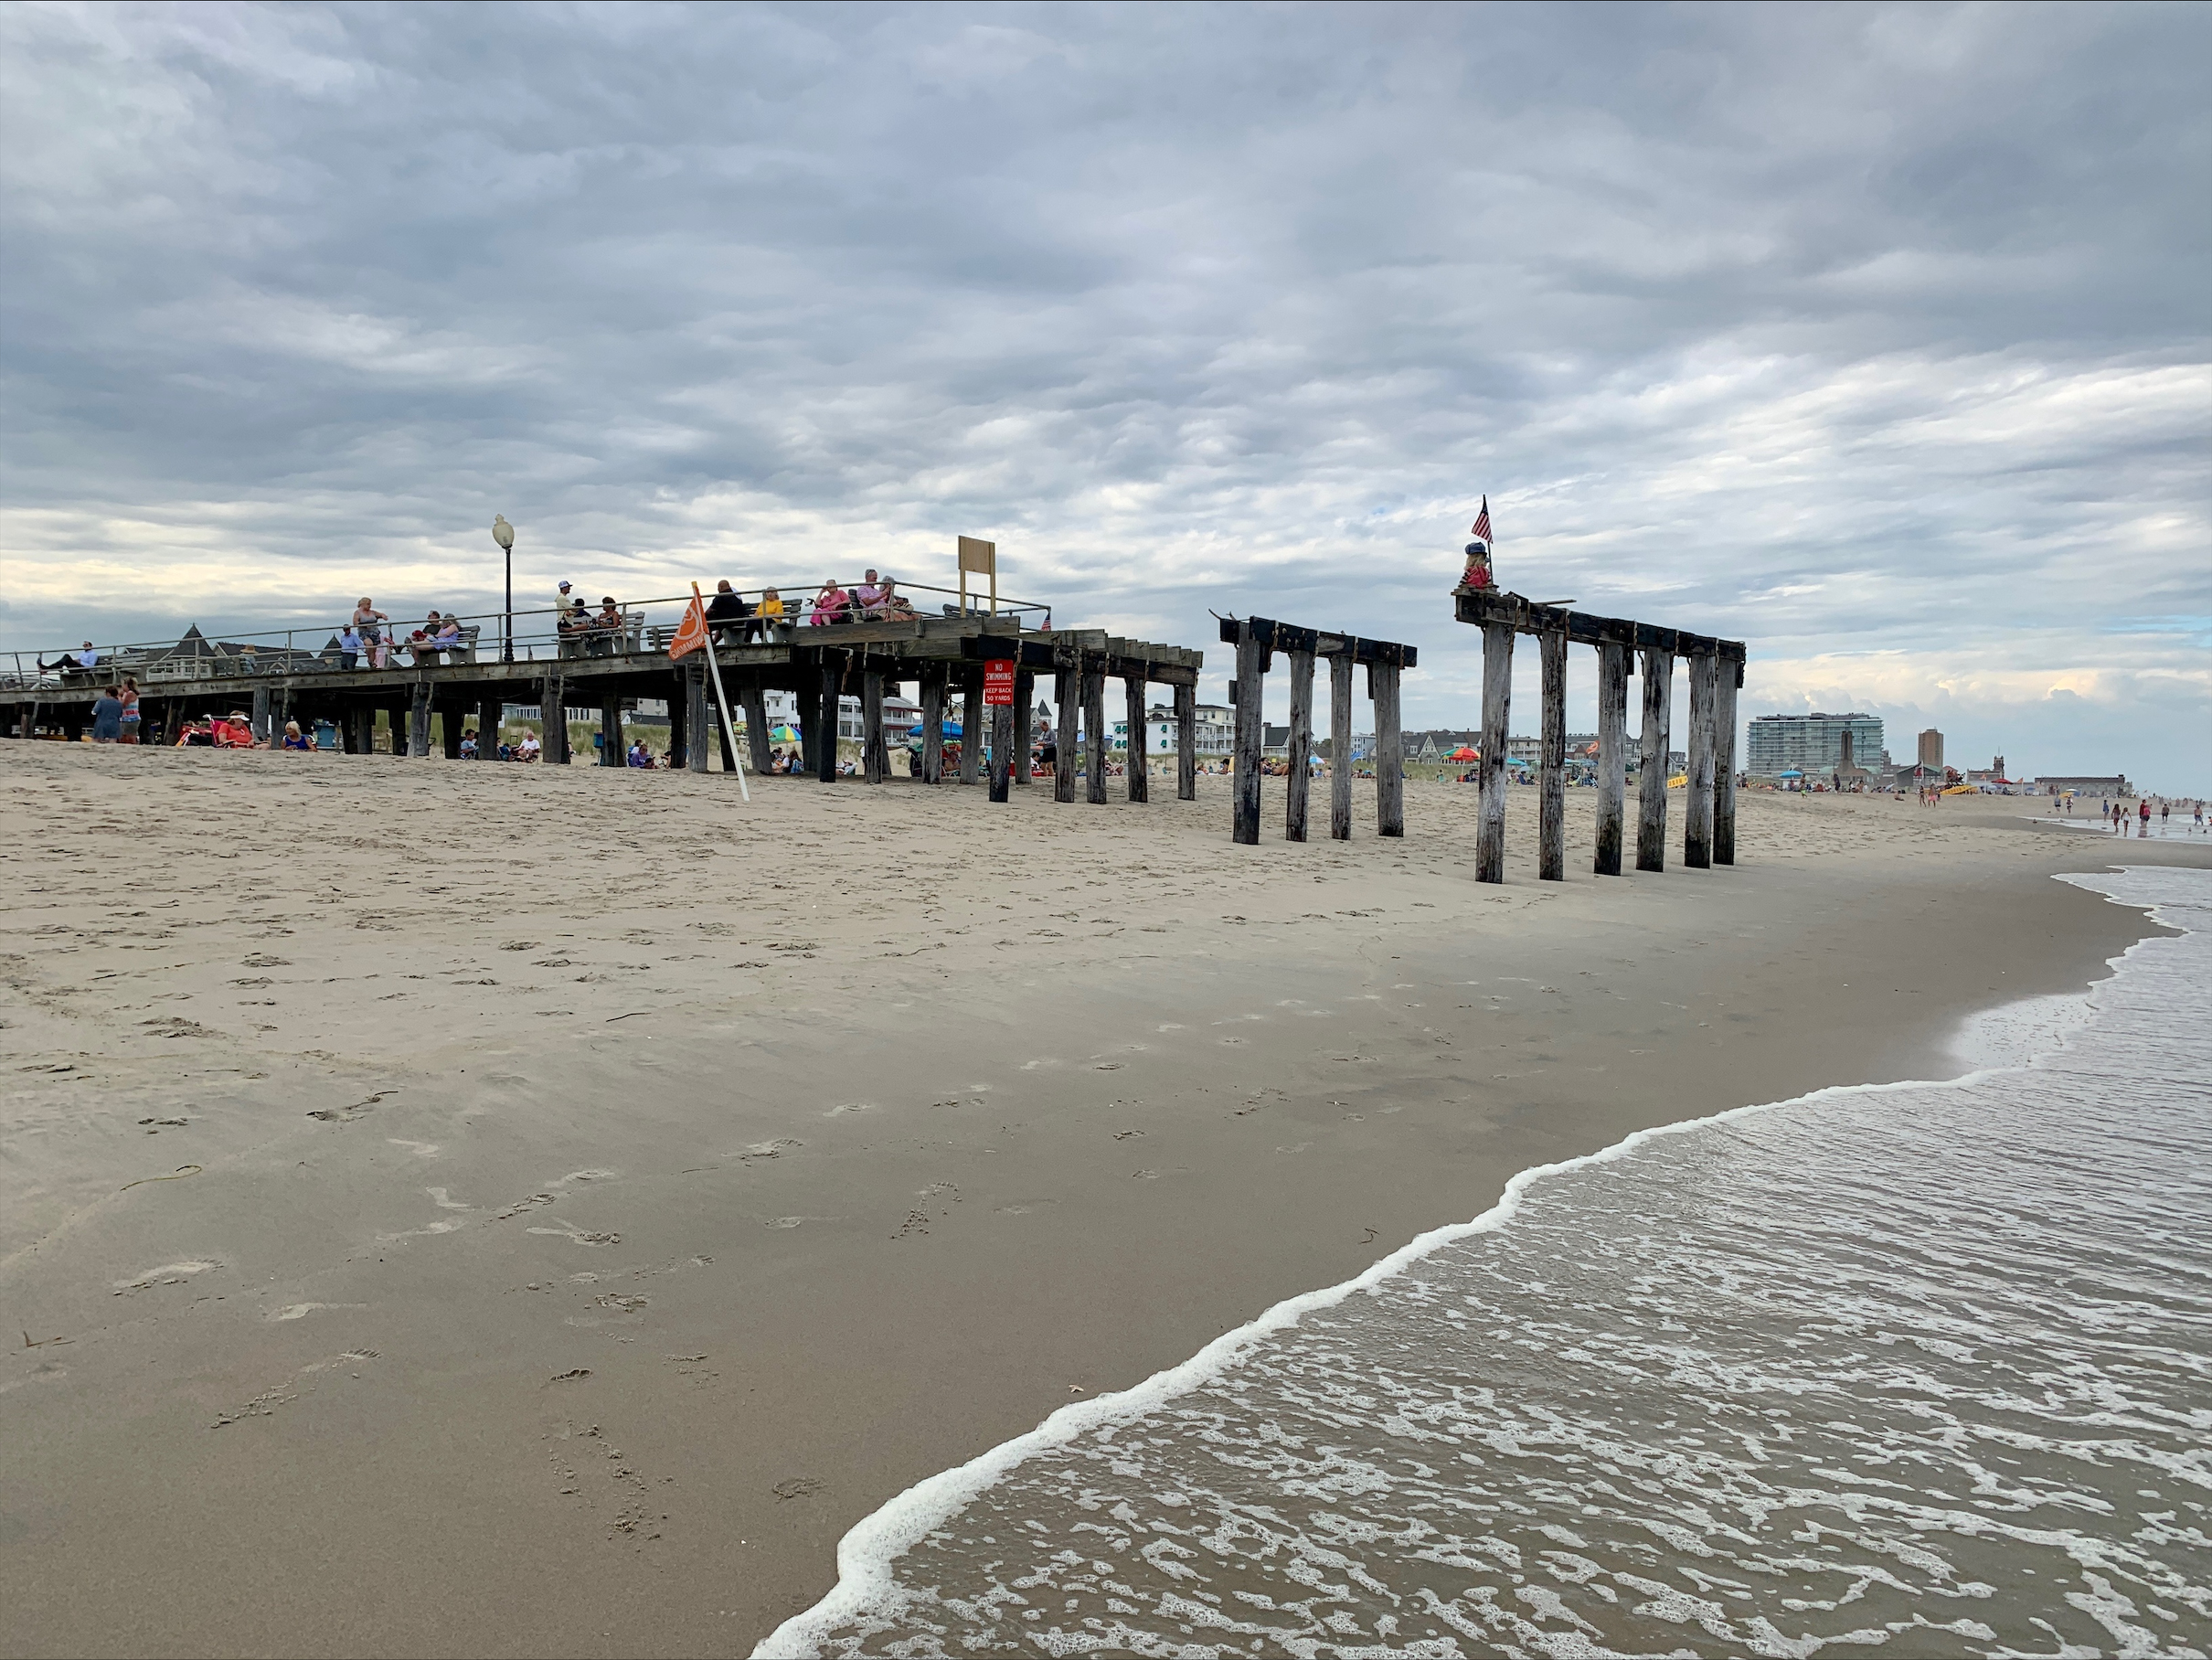 Jersey Shore pier in shape of cross in deeply religious town